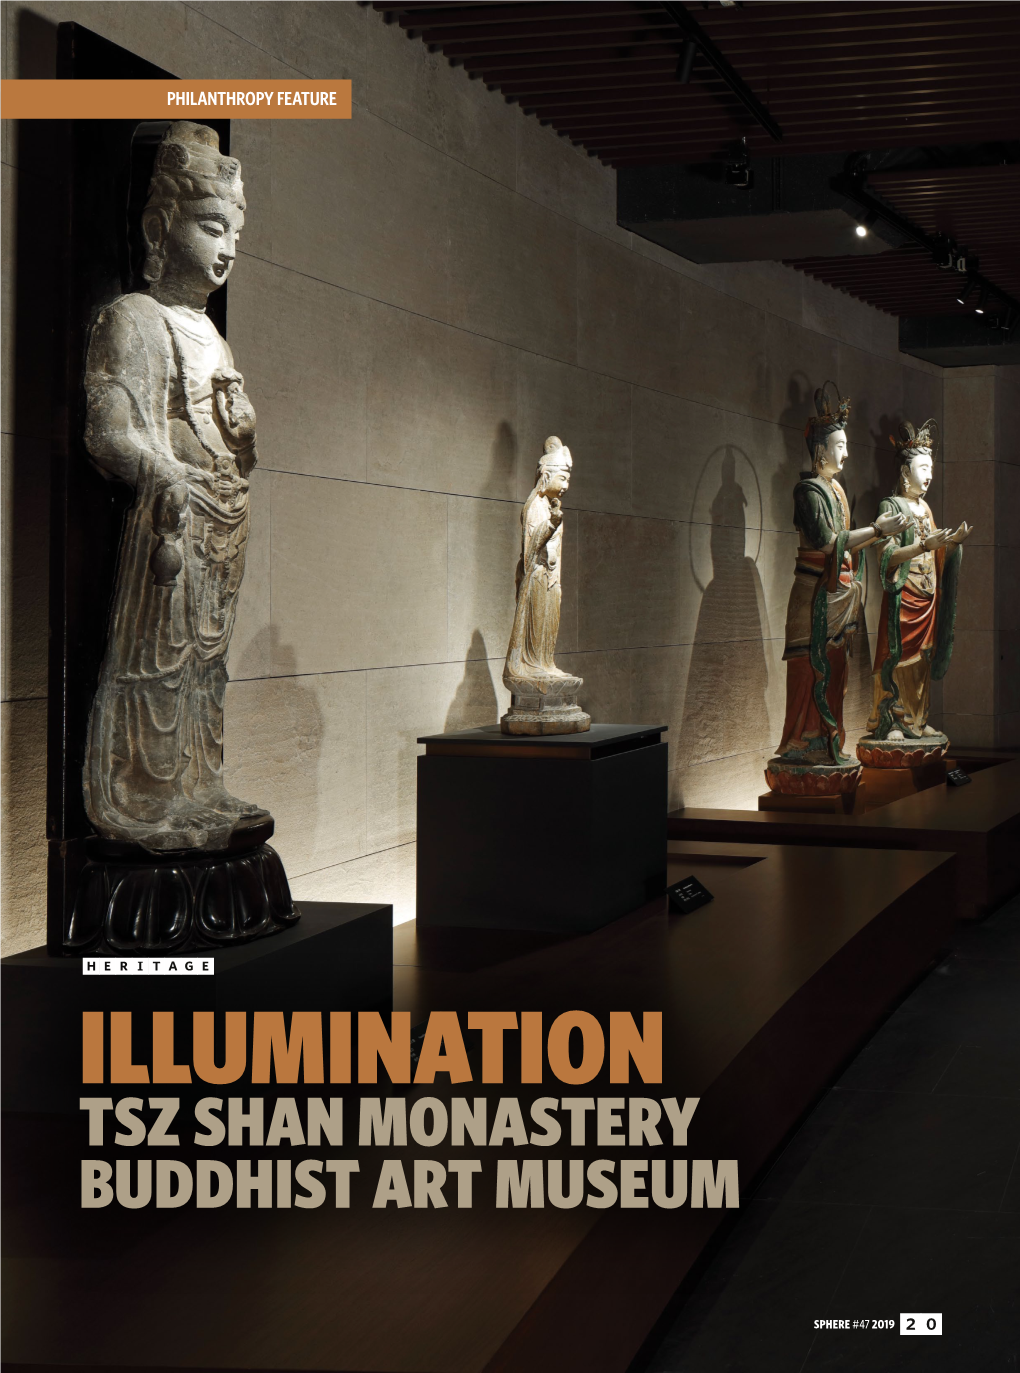 Illumination: the Tsz Shan Monastery Buddhist Art Museum